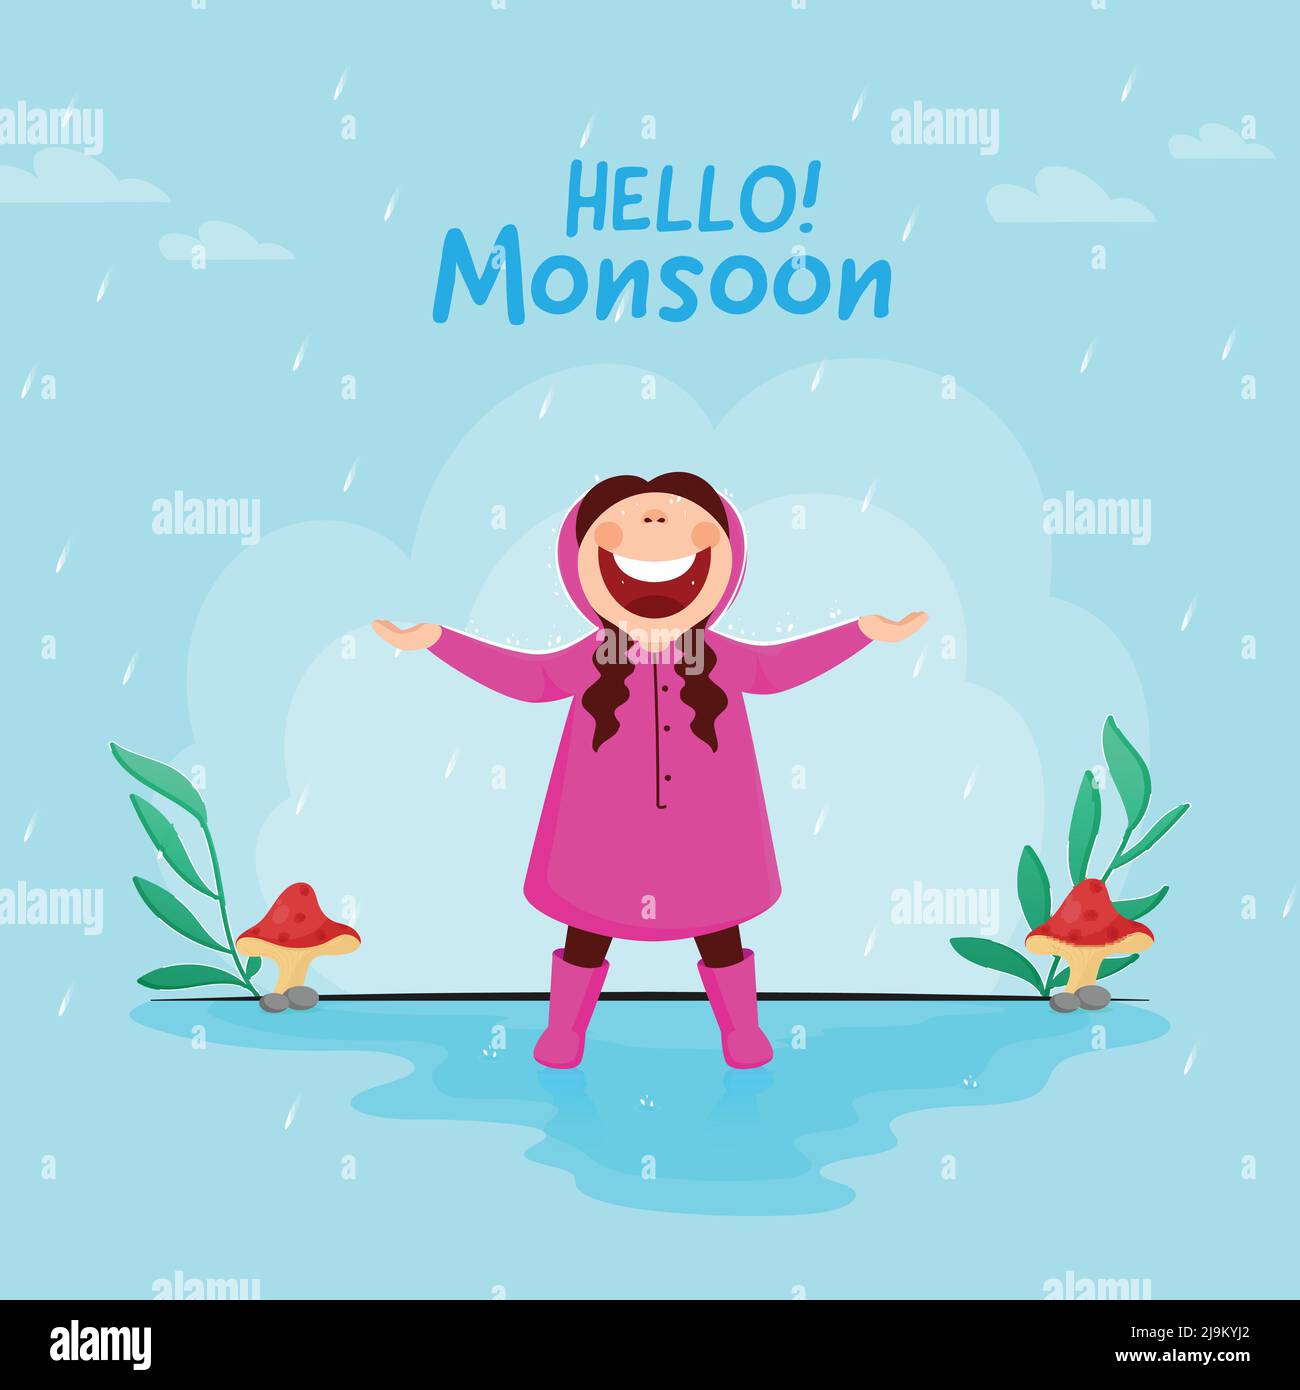 Hello Monsoon Poster Design With Cheerful Young Girl Enjoying Rainy Season On Cyan Background. Stock Vector